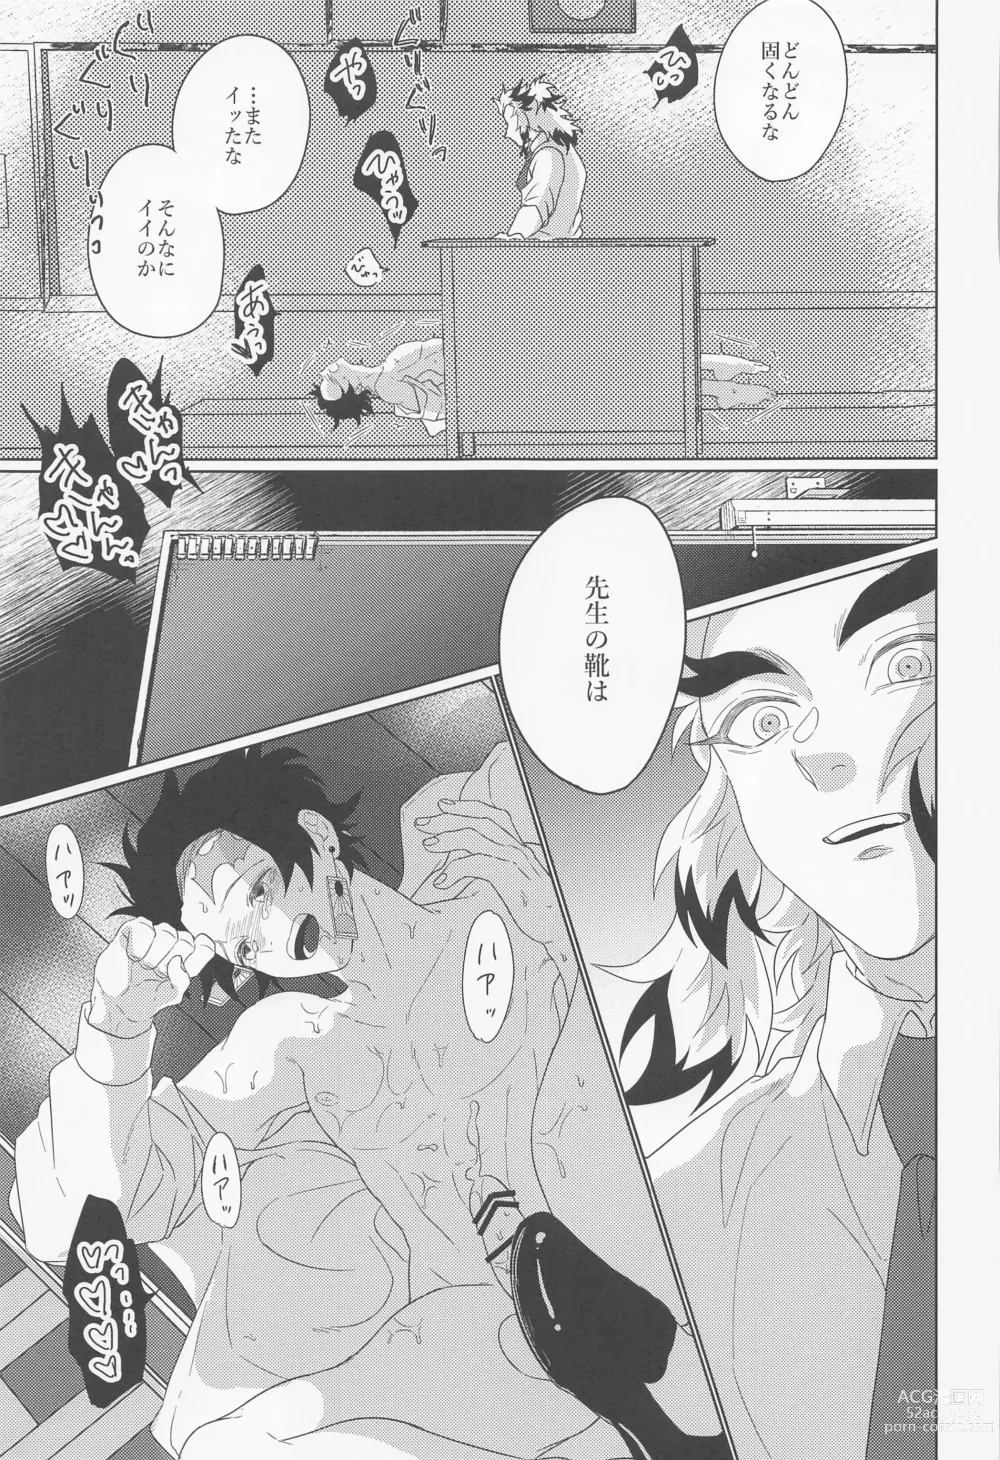 Page 32 of doujinshi Kagerou